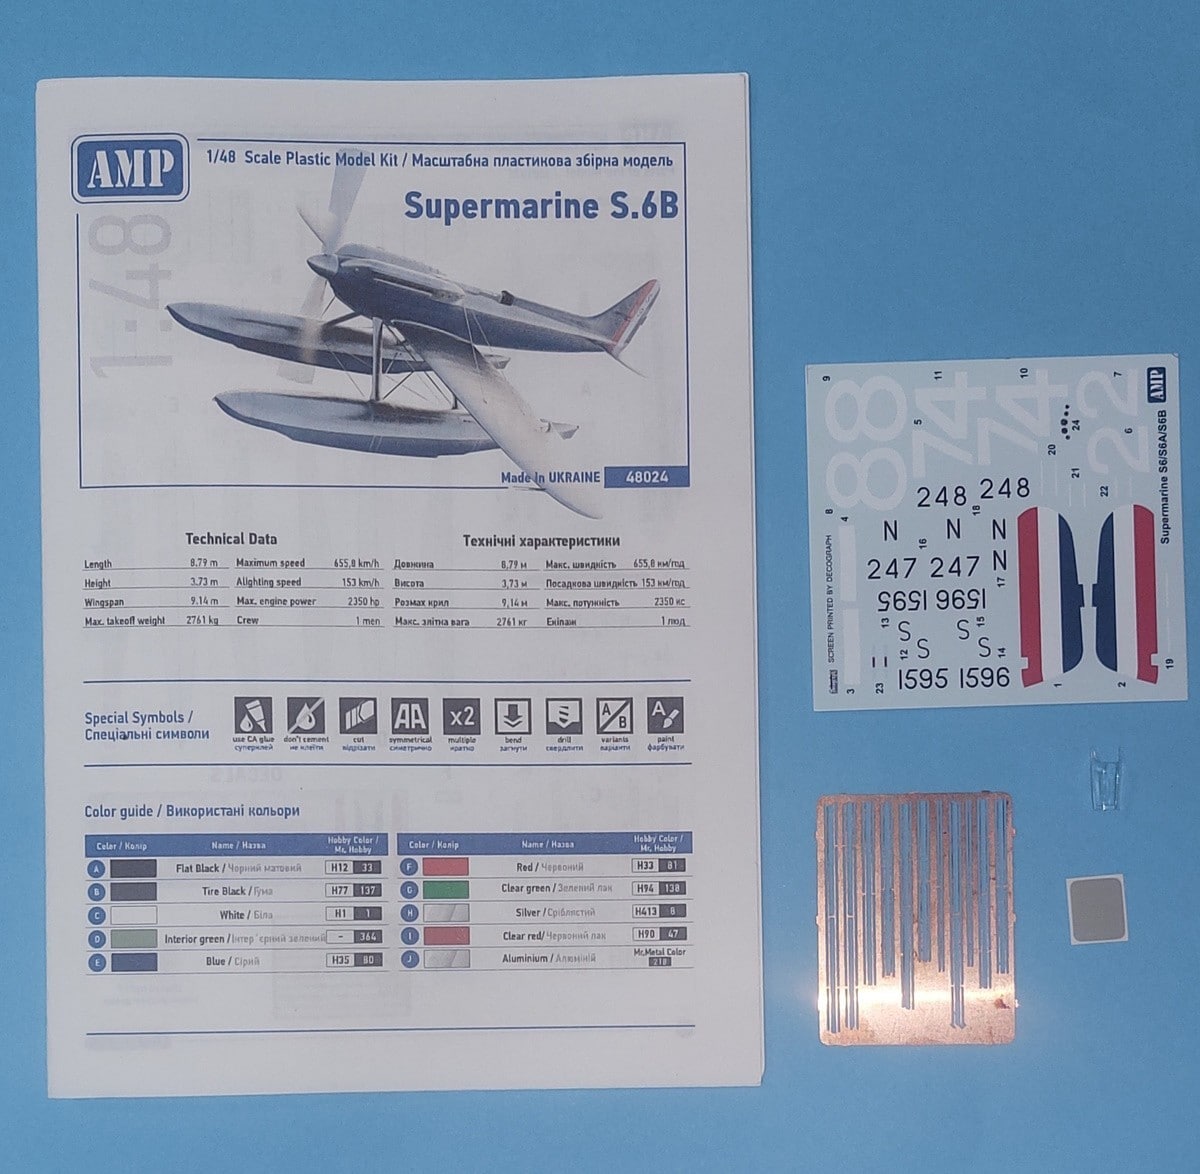 AMP 1/48 scale Supermarine S.6B box contents revealed-2